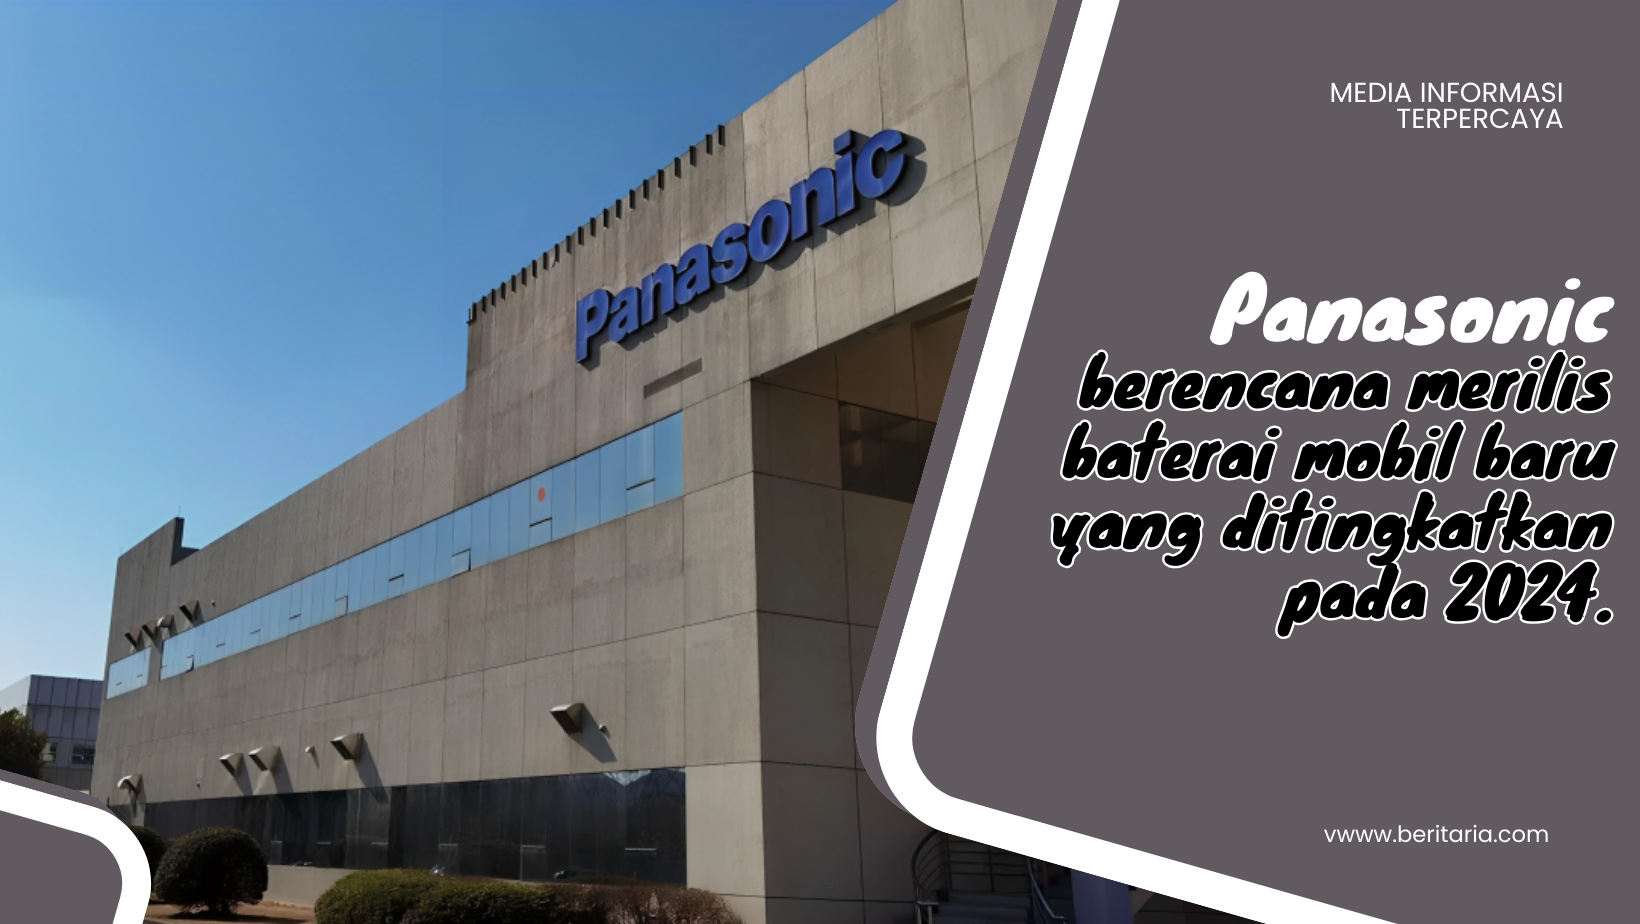 Beritaria.com | Panasonic berencana merilis baterai mobil baru yang ditingkatkan pada 2024.